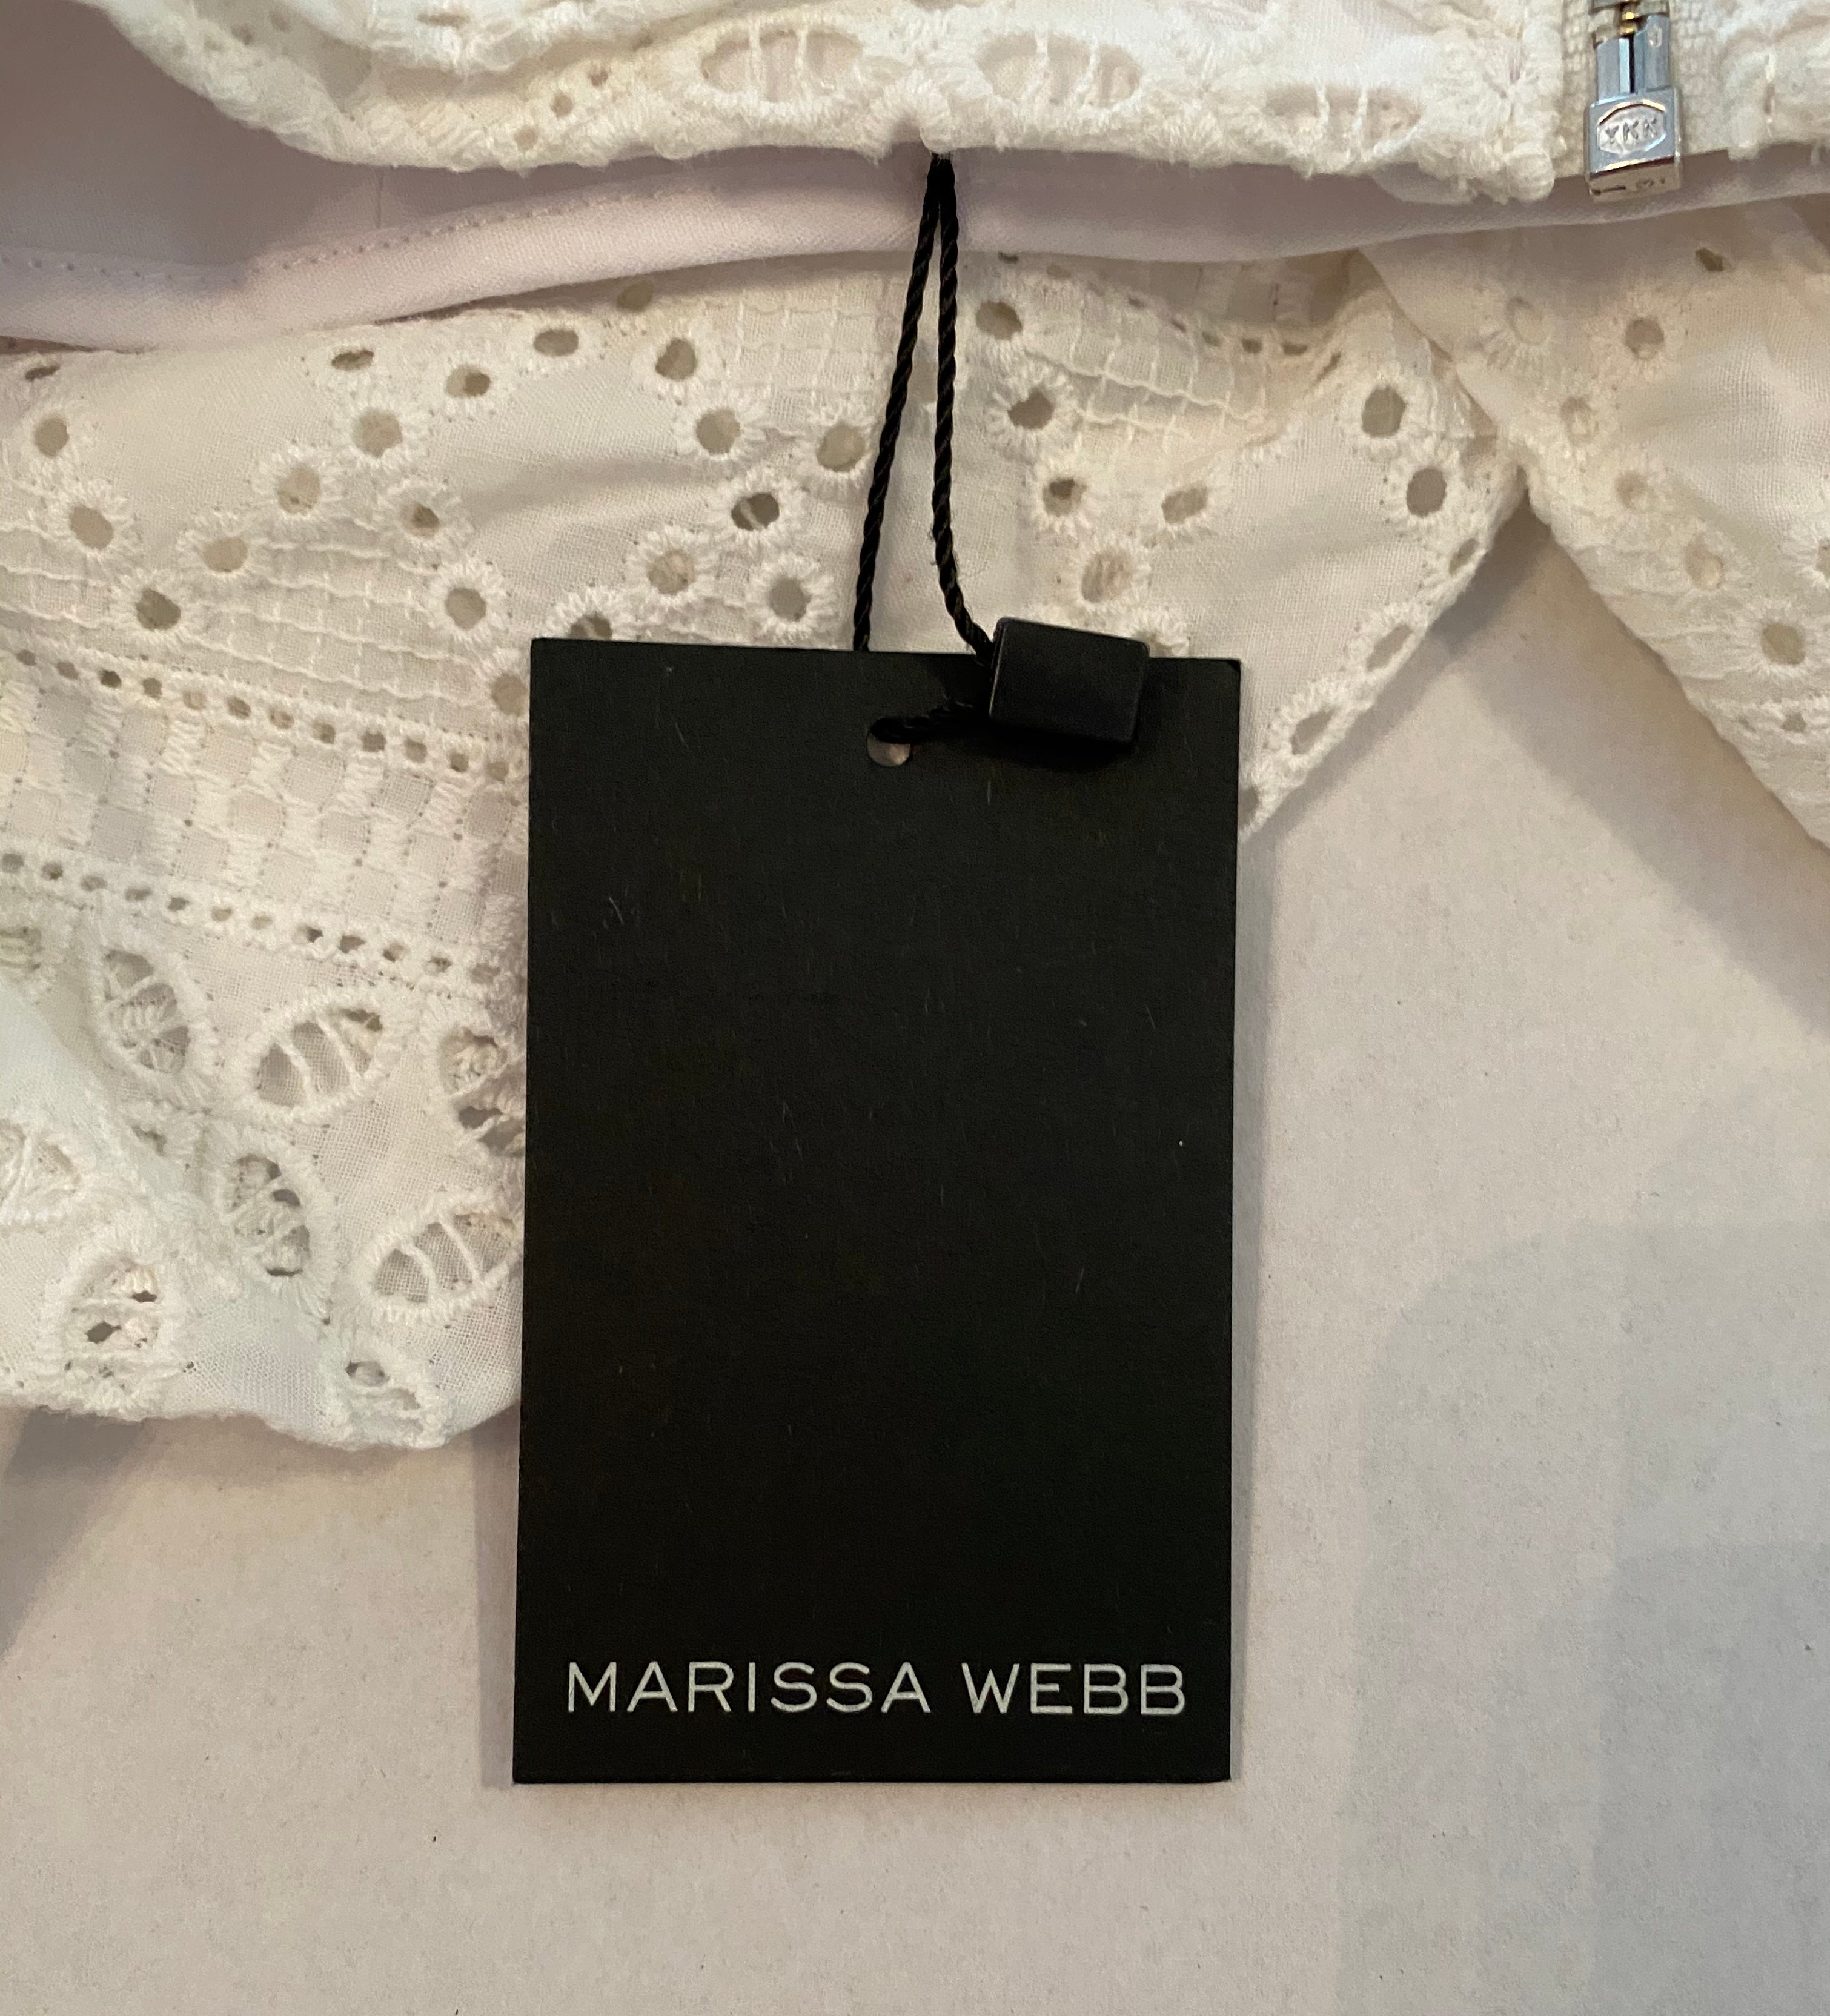 Marissa Webb White Cotton Pascal Eyelet Crop Top sz XS